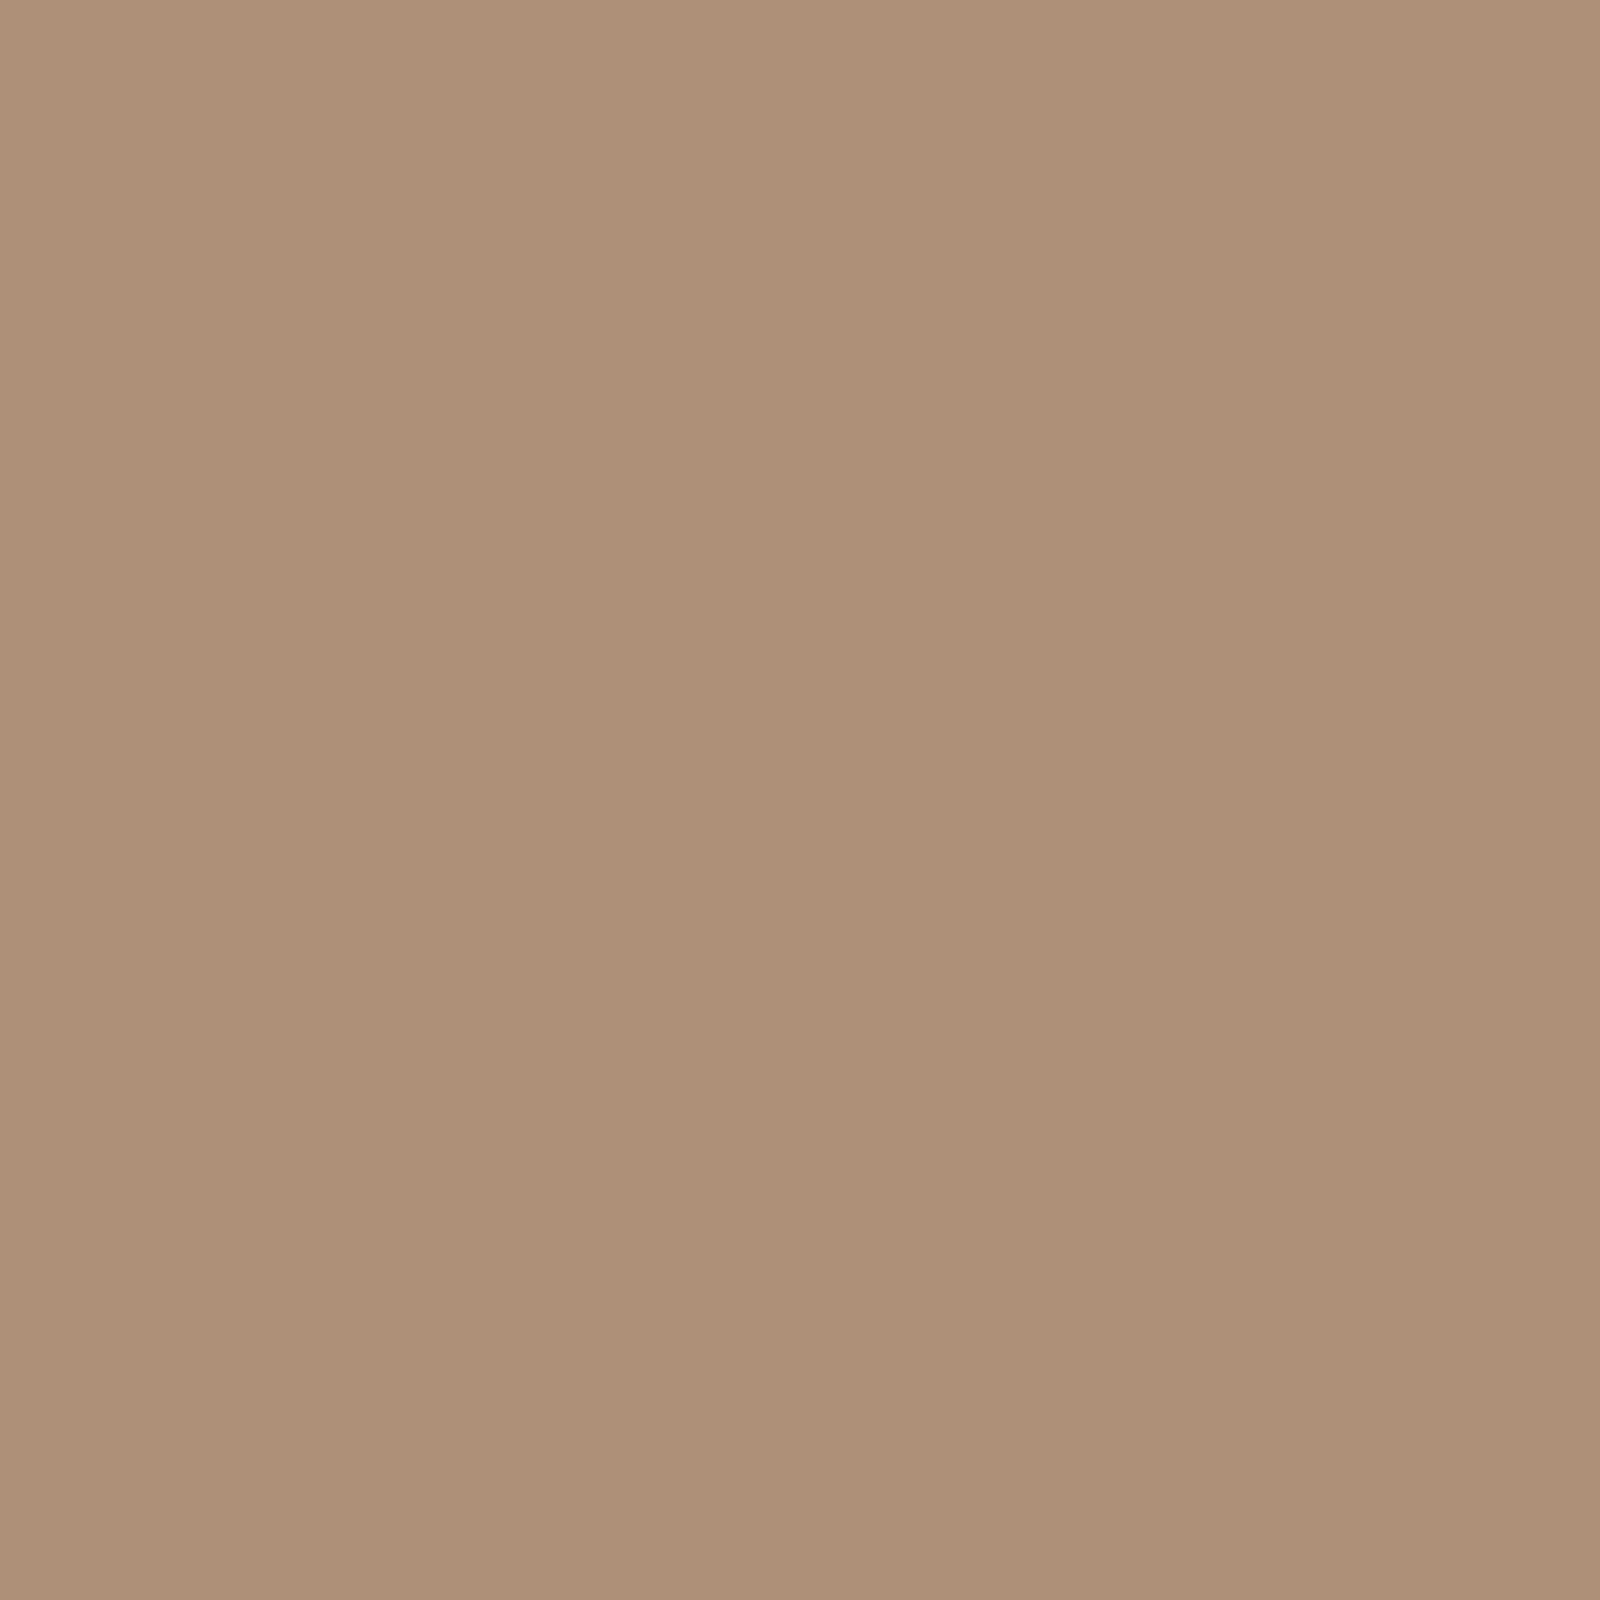 Sand Beige - 1463/641 - Cement Colors